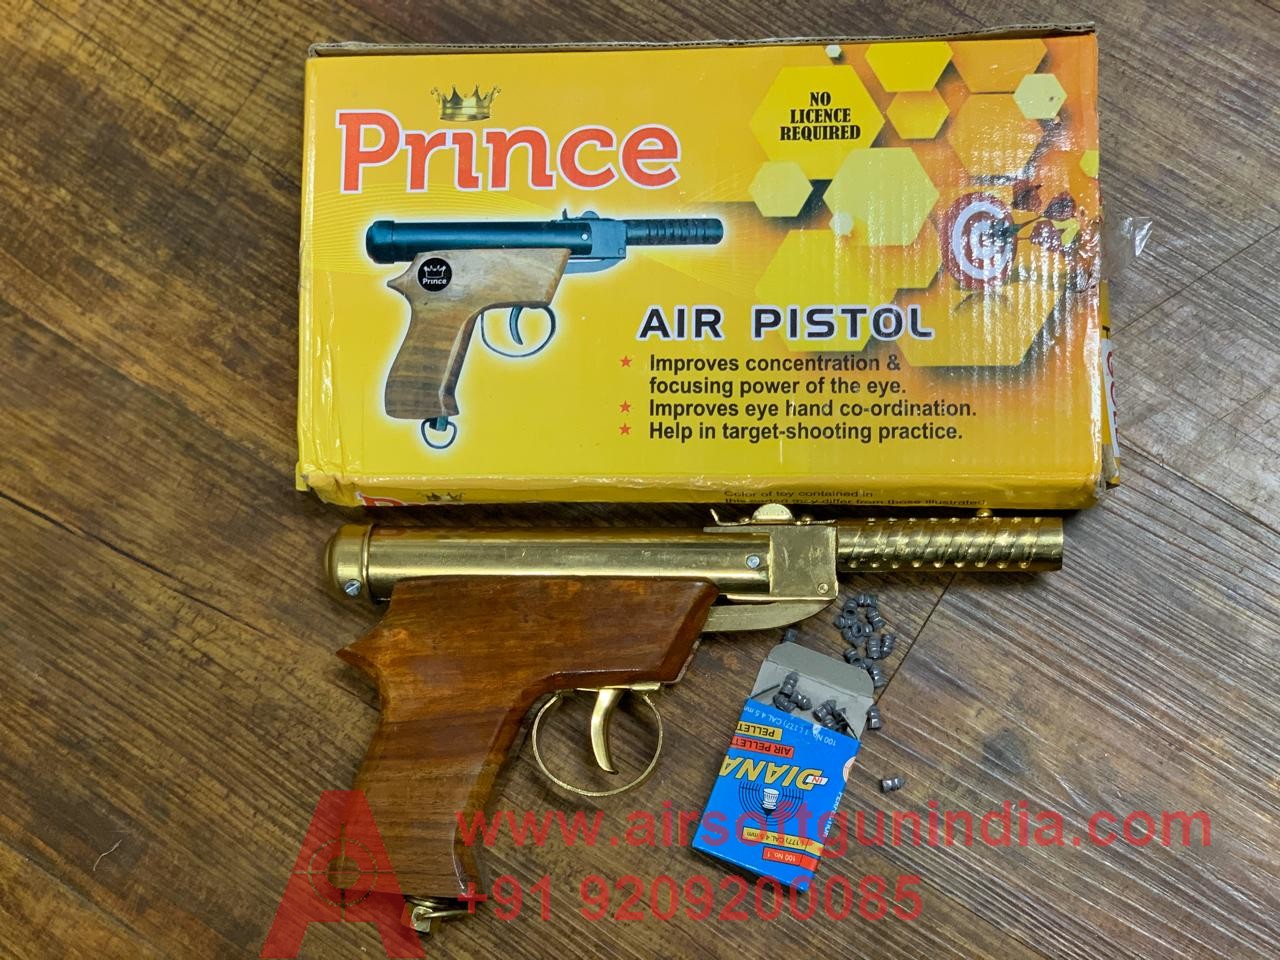 Prince Golden Air Pistol By Airsoft Gun India Airsoft Gun India